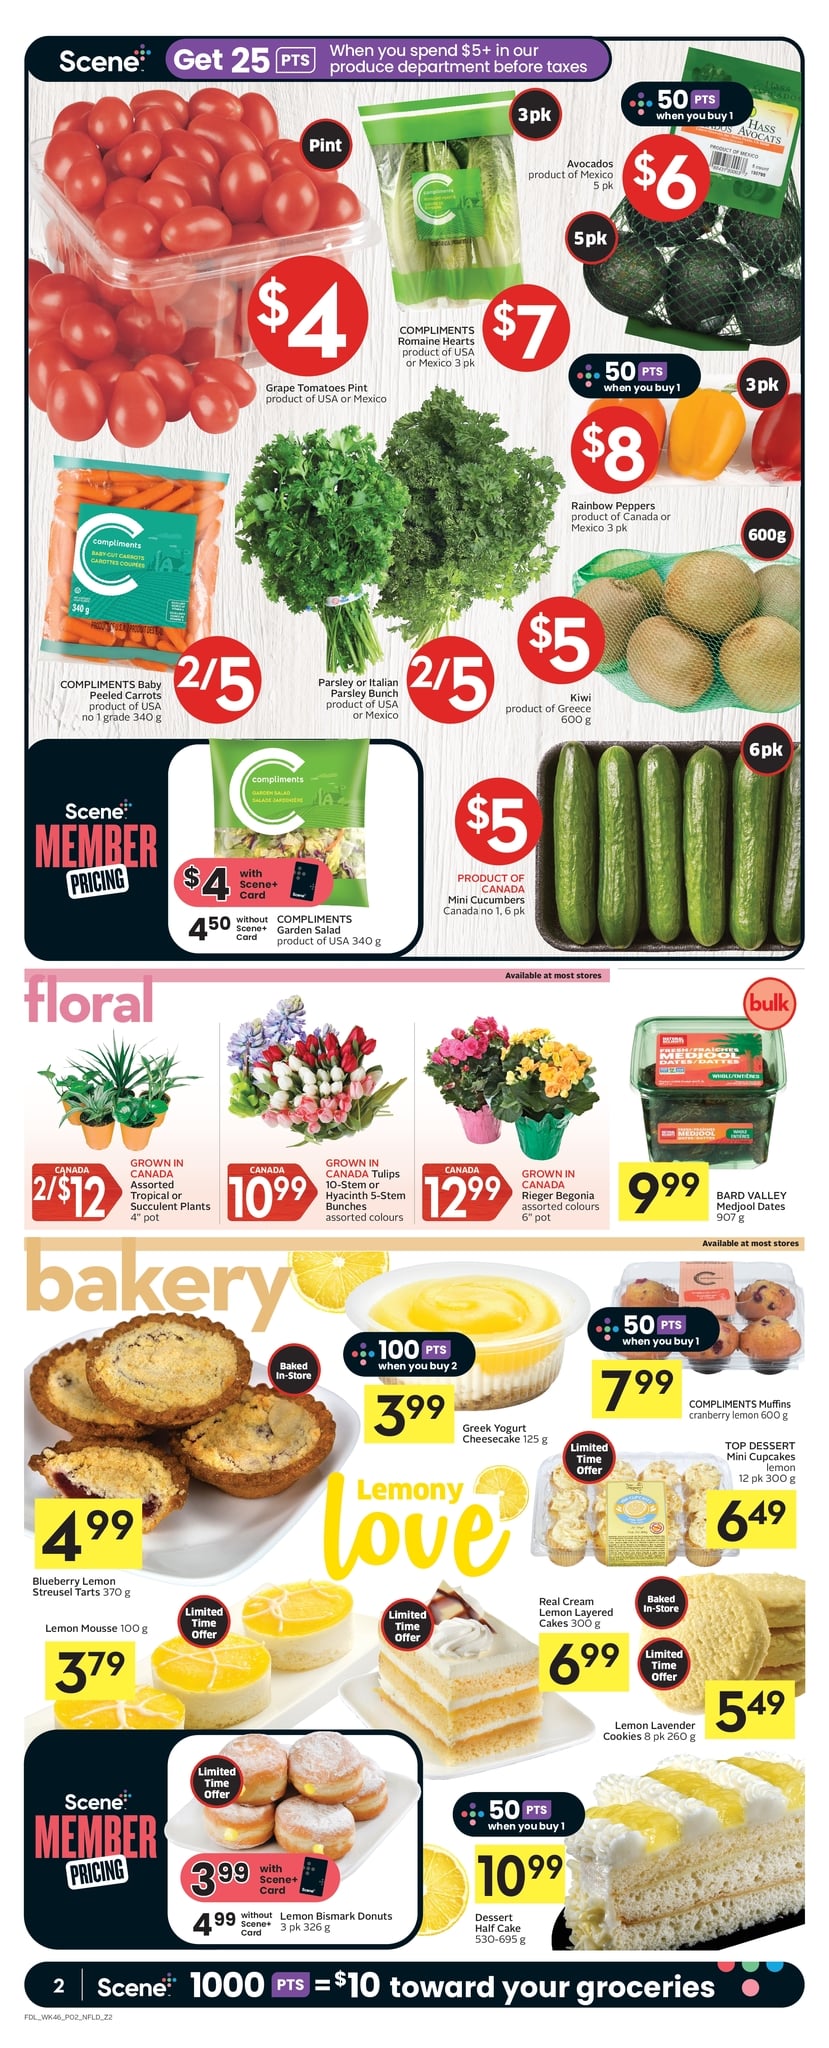 Foodland - Newfoundland - Weekly Flyer Specials - Page 2